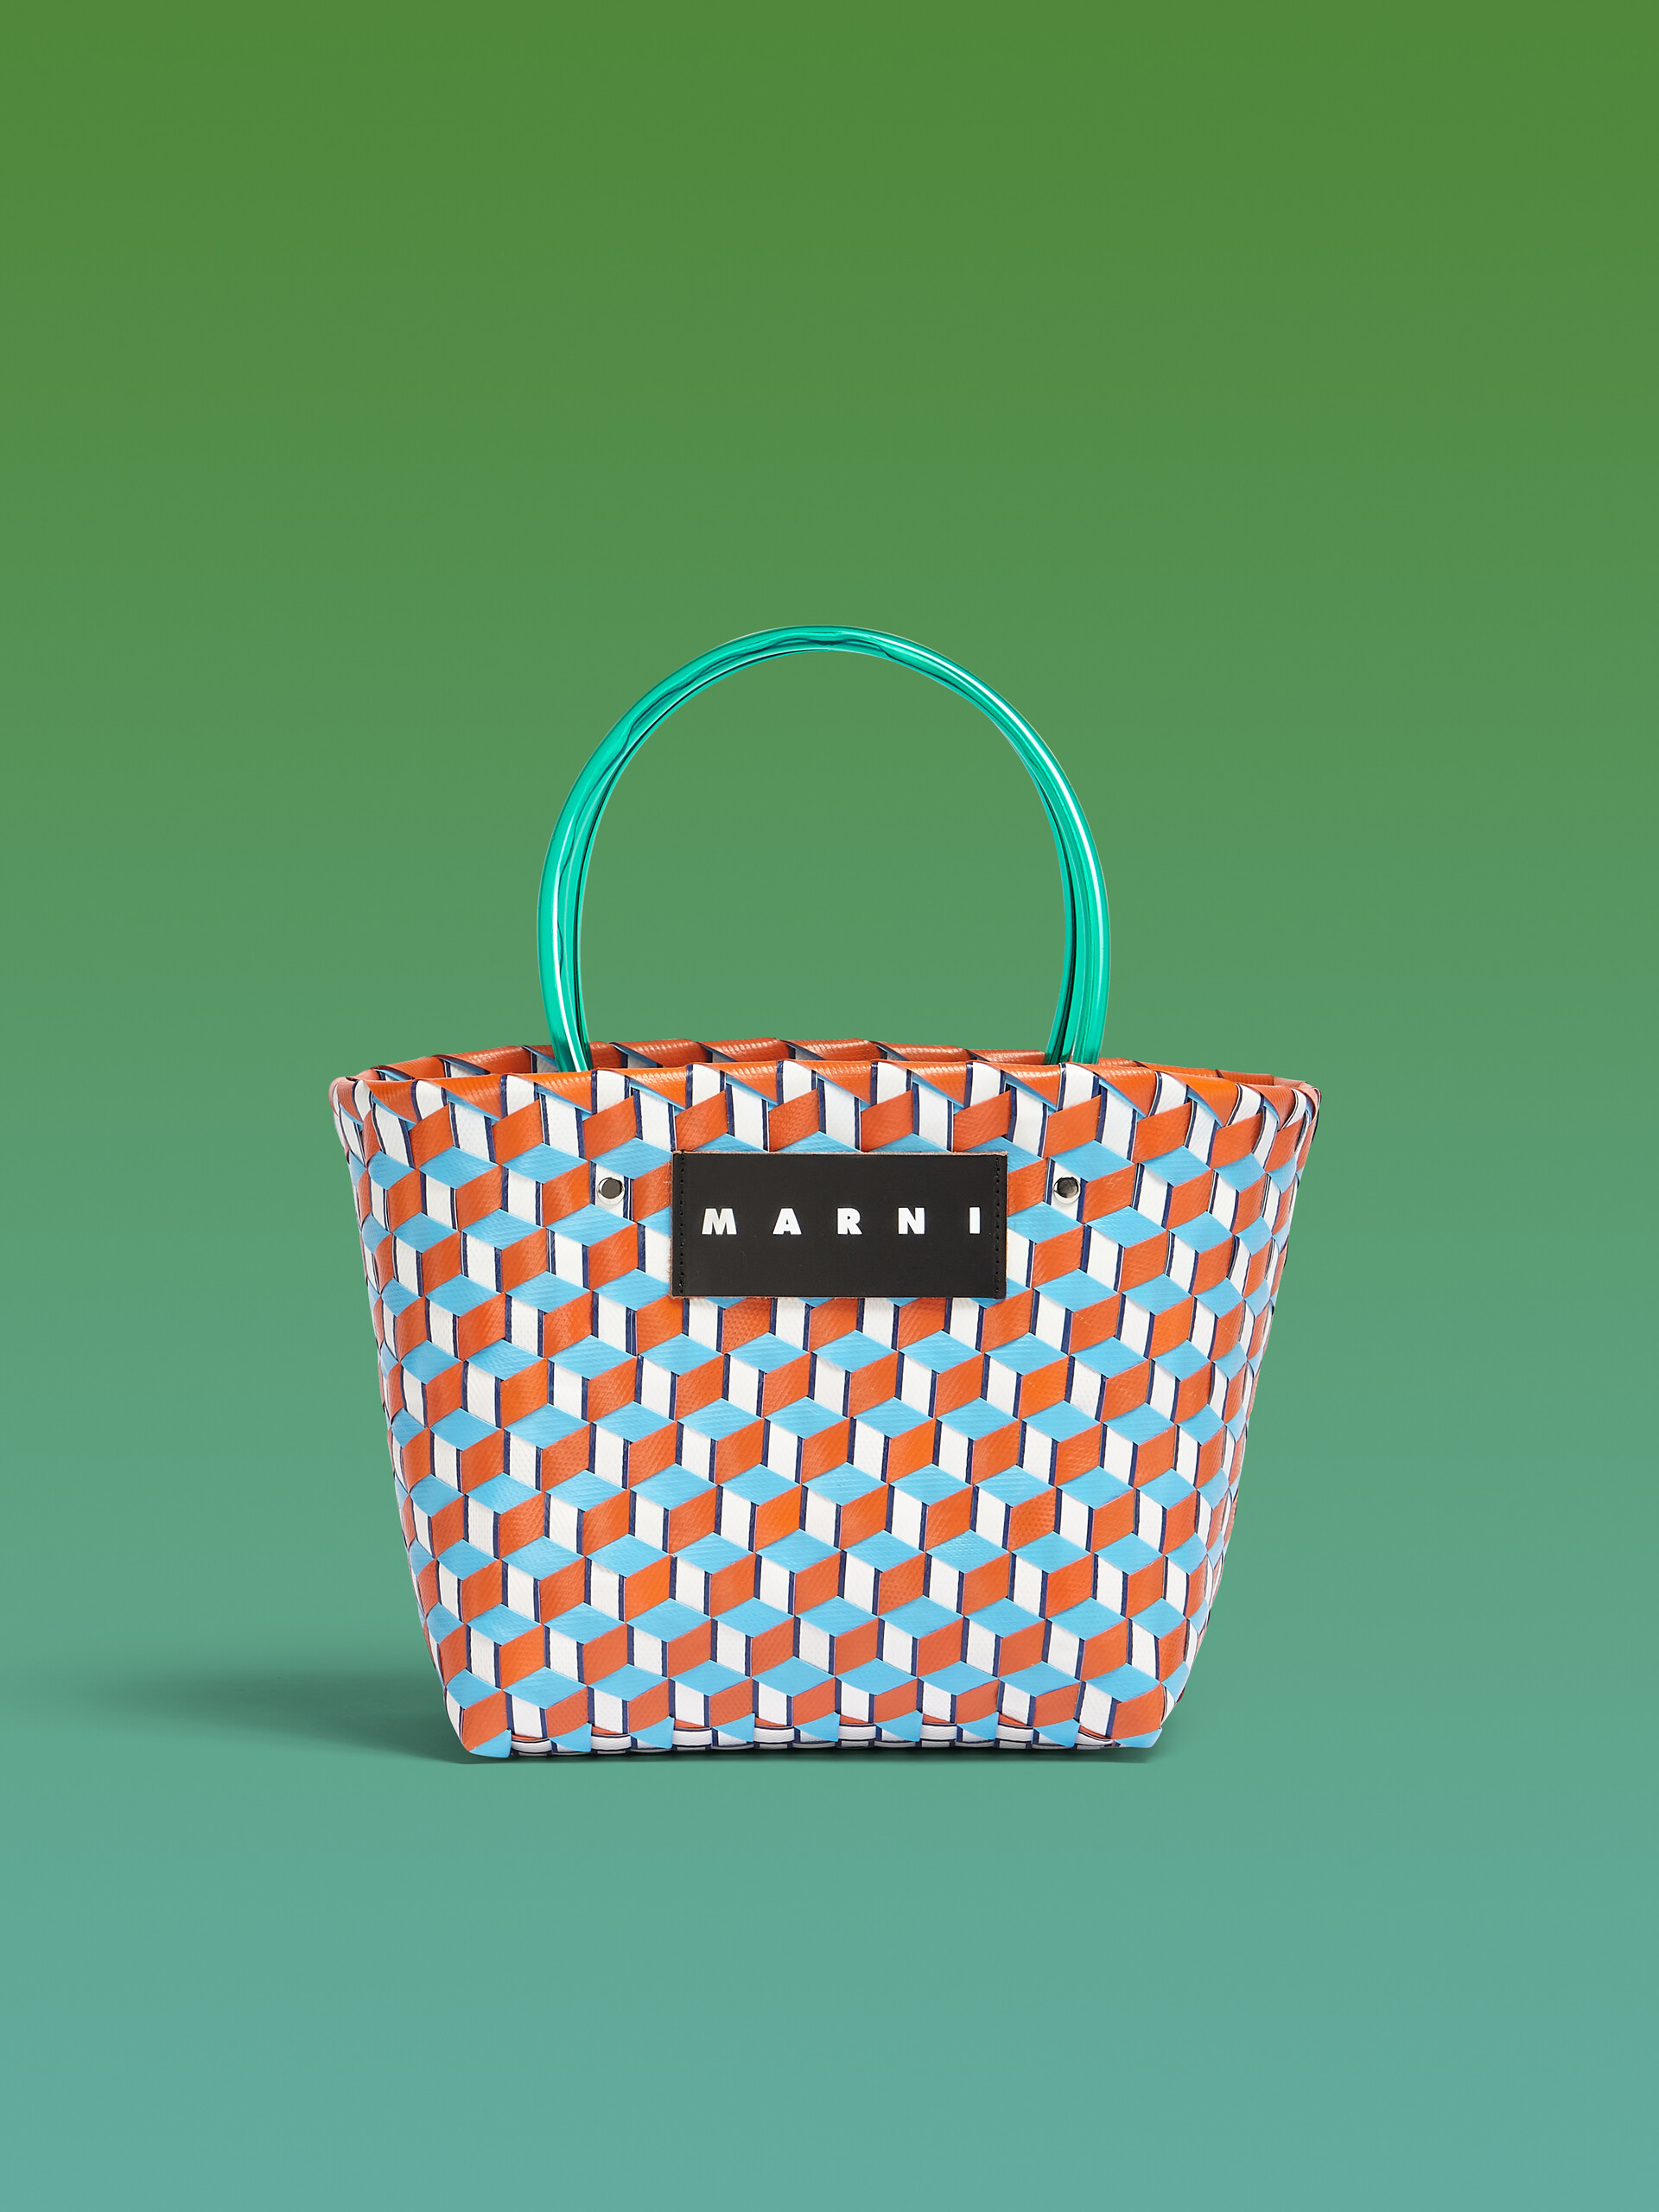 MARNI MARKET 3D BAG in orange cube woven material